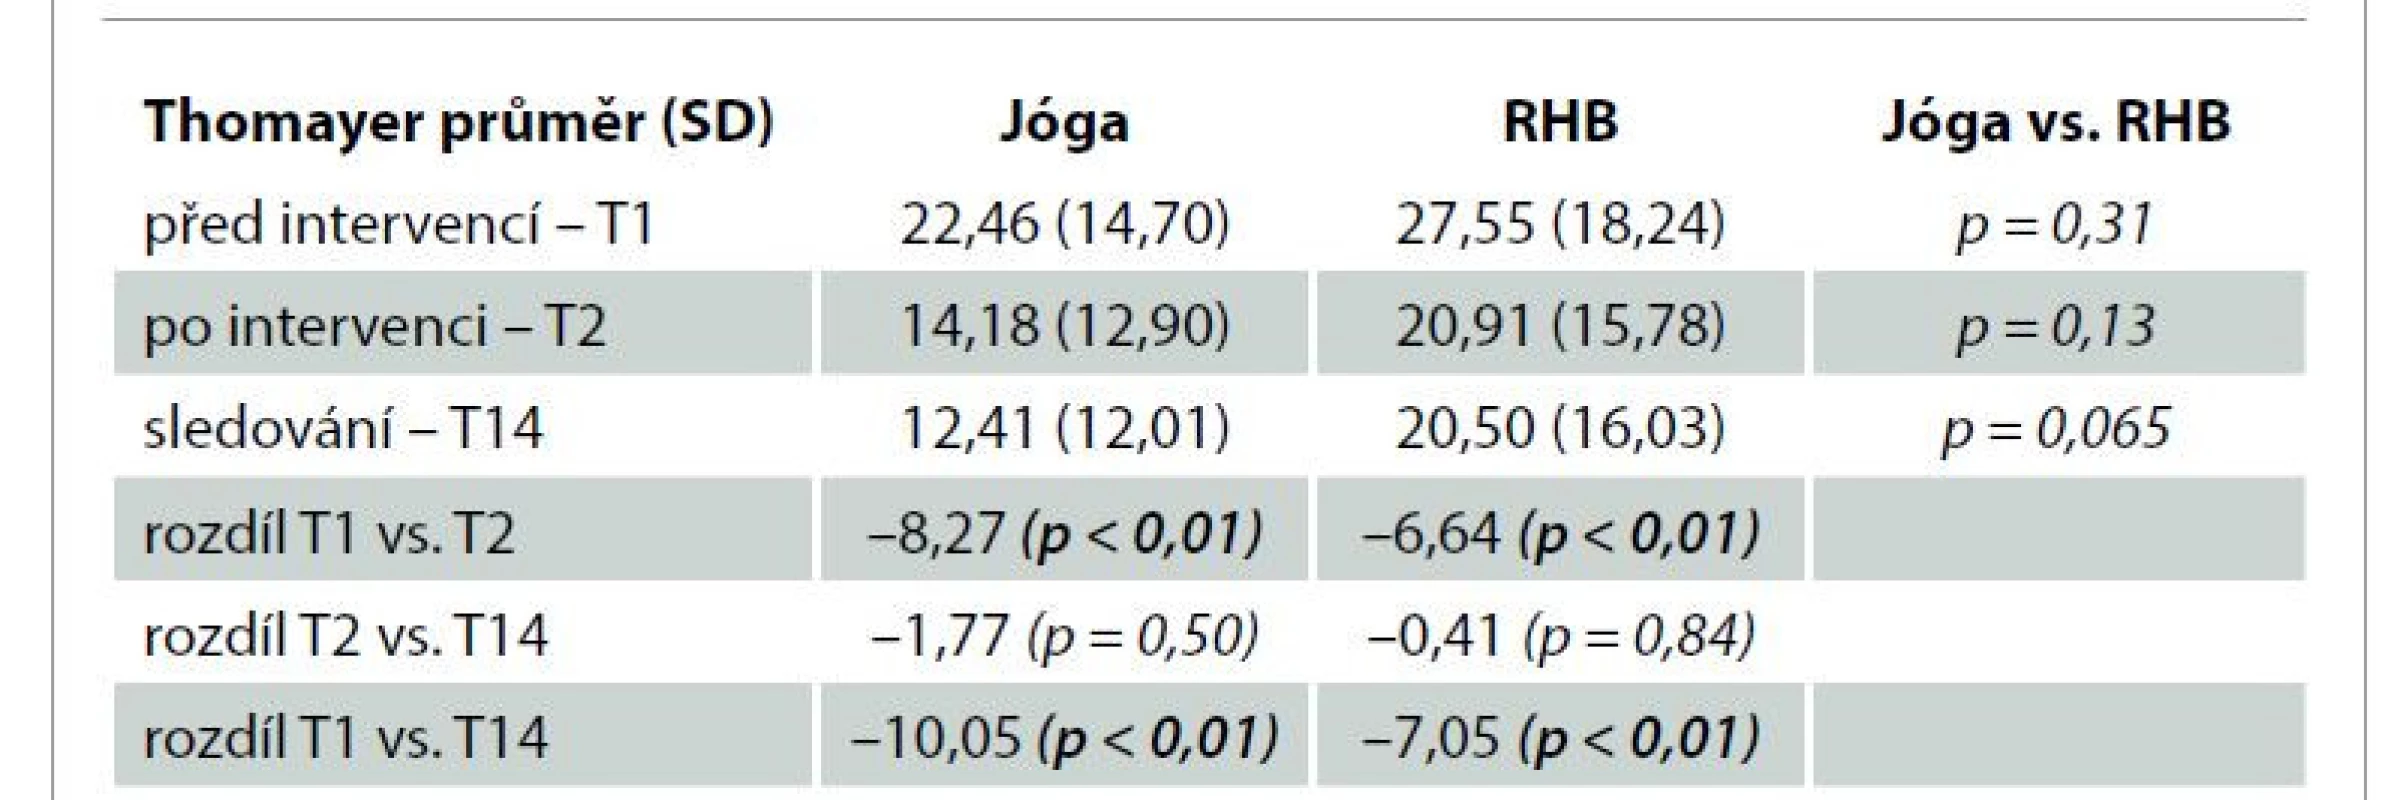 Vývoj hodnot Thomayerovy distance v čase a porovnání mezi skupinou
Jóga a RHB.<br>
Tab. 4. Changes of the Thomayer’s distance score in time and differences between
the Yoga and Rehabilitation groups.